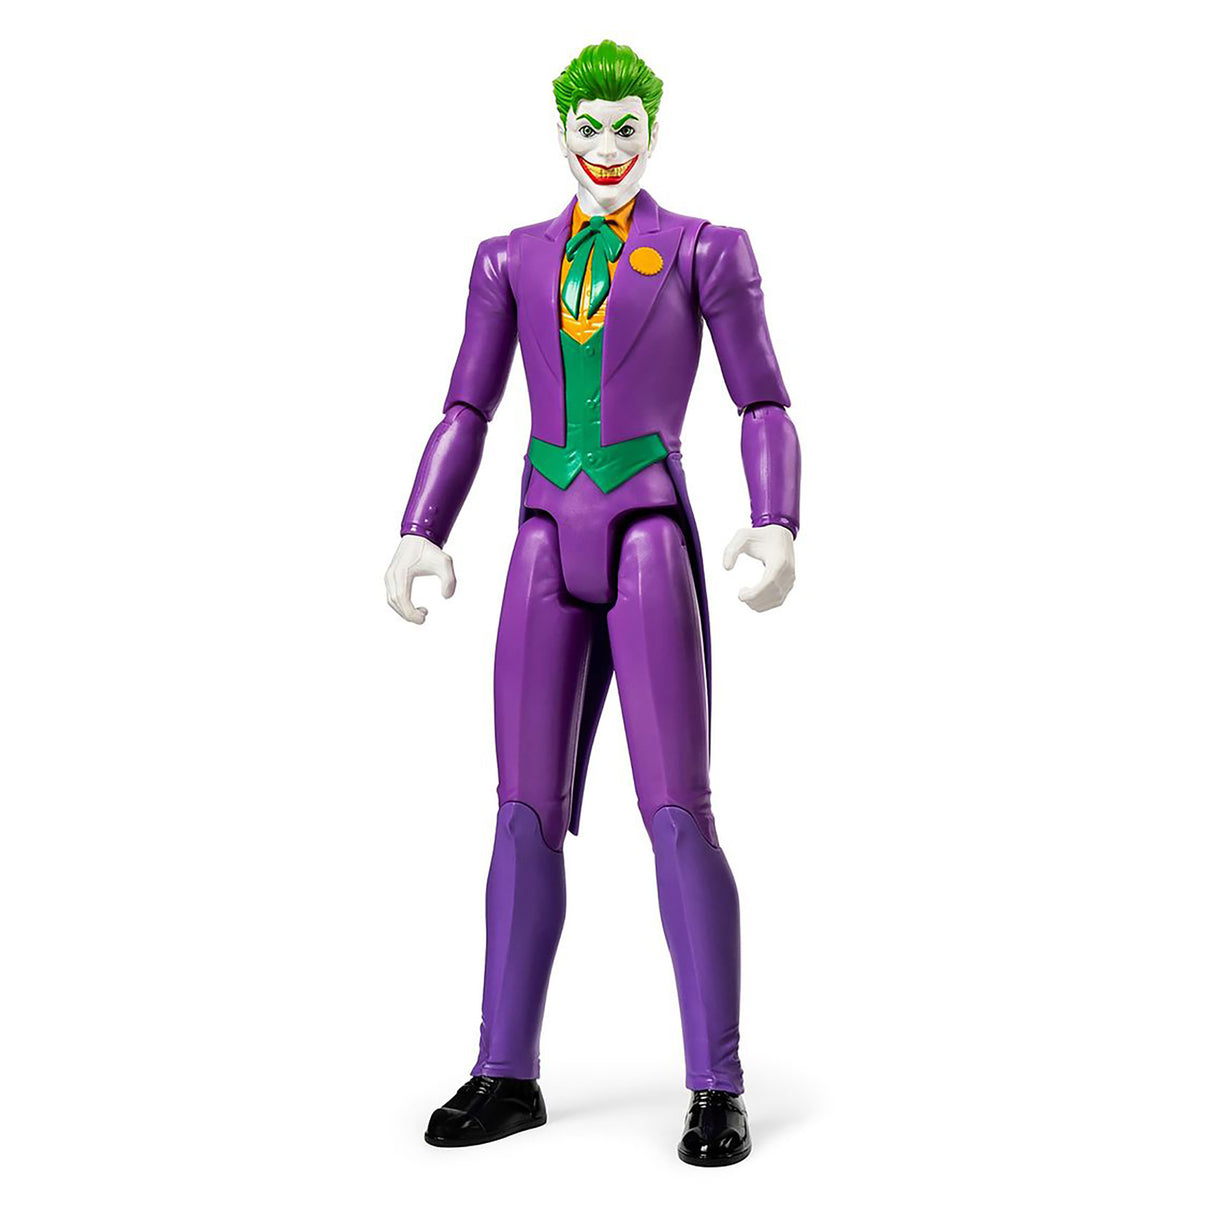 DC Batman Figurine - The Joker Figure (12 inches)